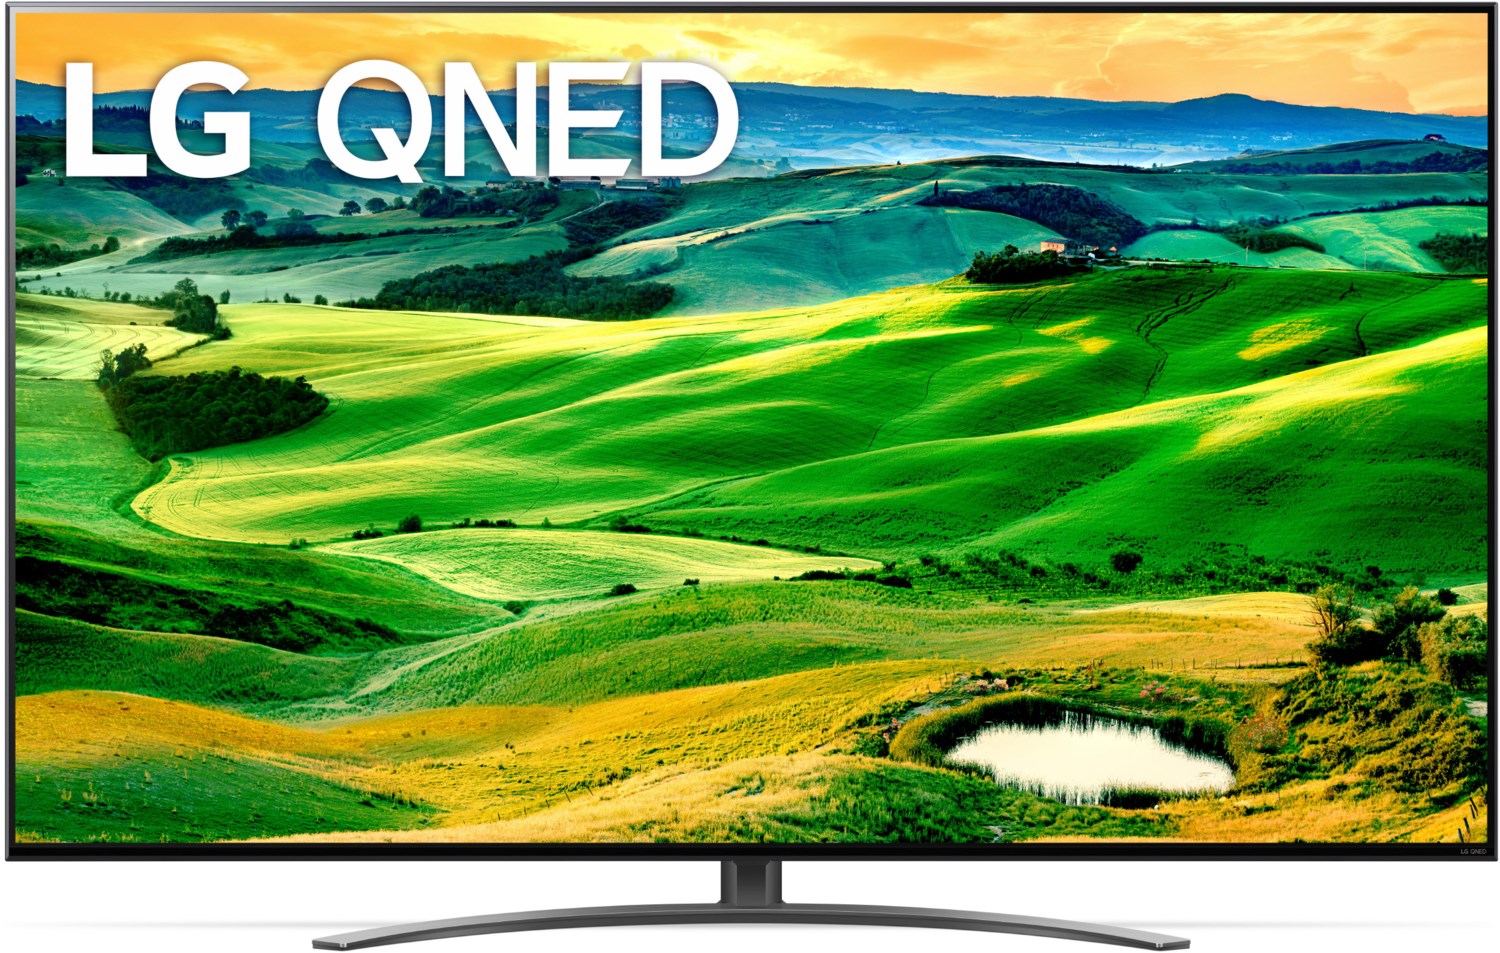 65QNED819QA 164 cm (65) LCD-TV mit LED-Technik / G